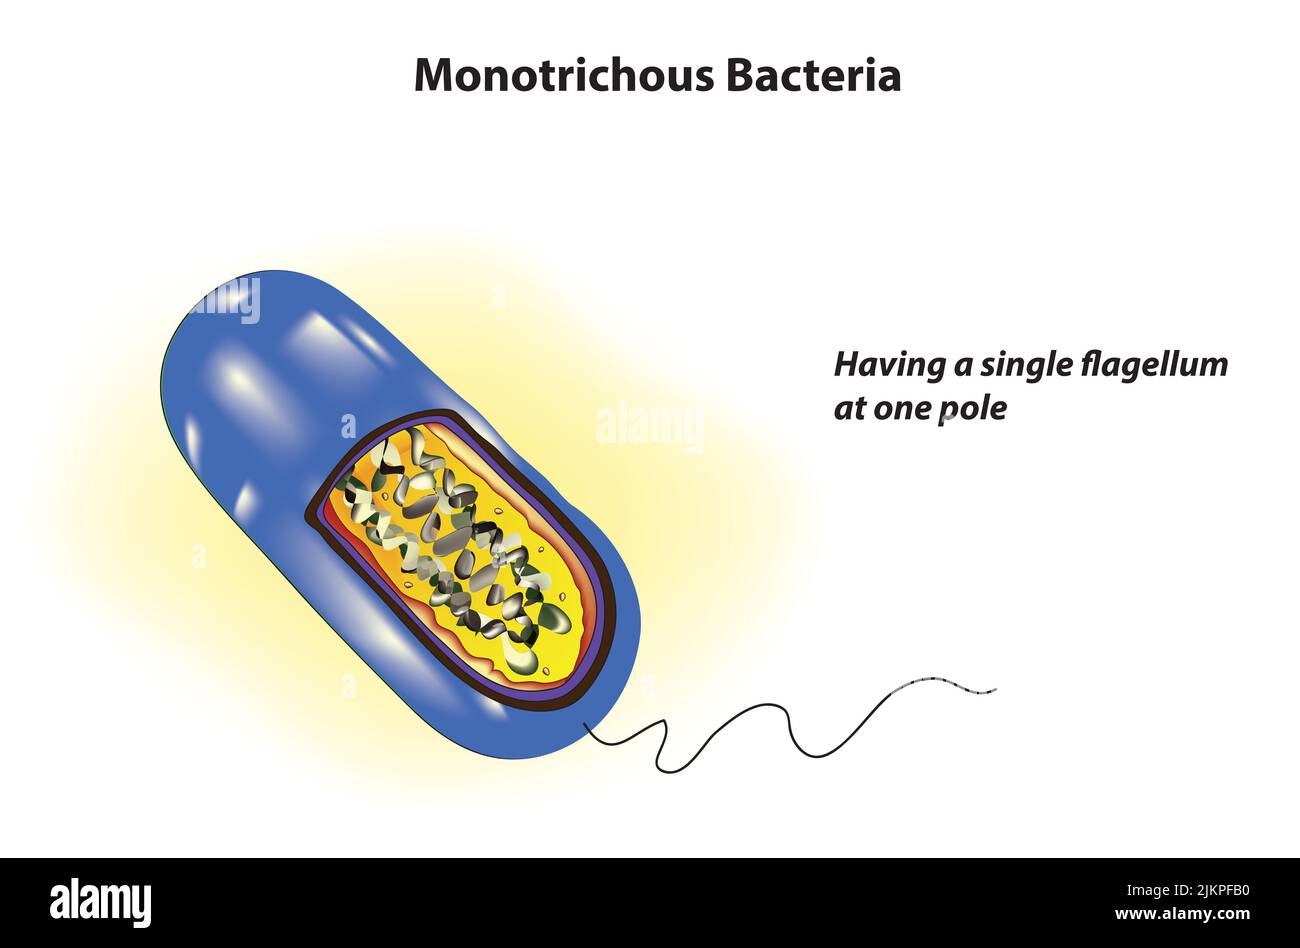 Monotrichous Bacteria anatomy (have a single flagellum) Stock Photo